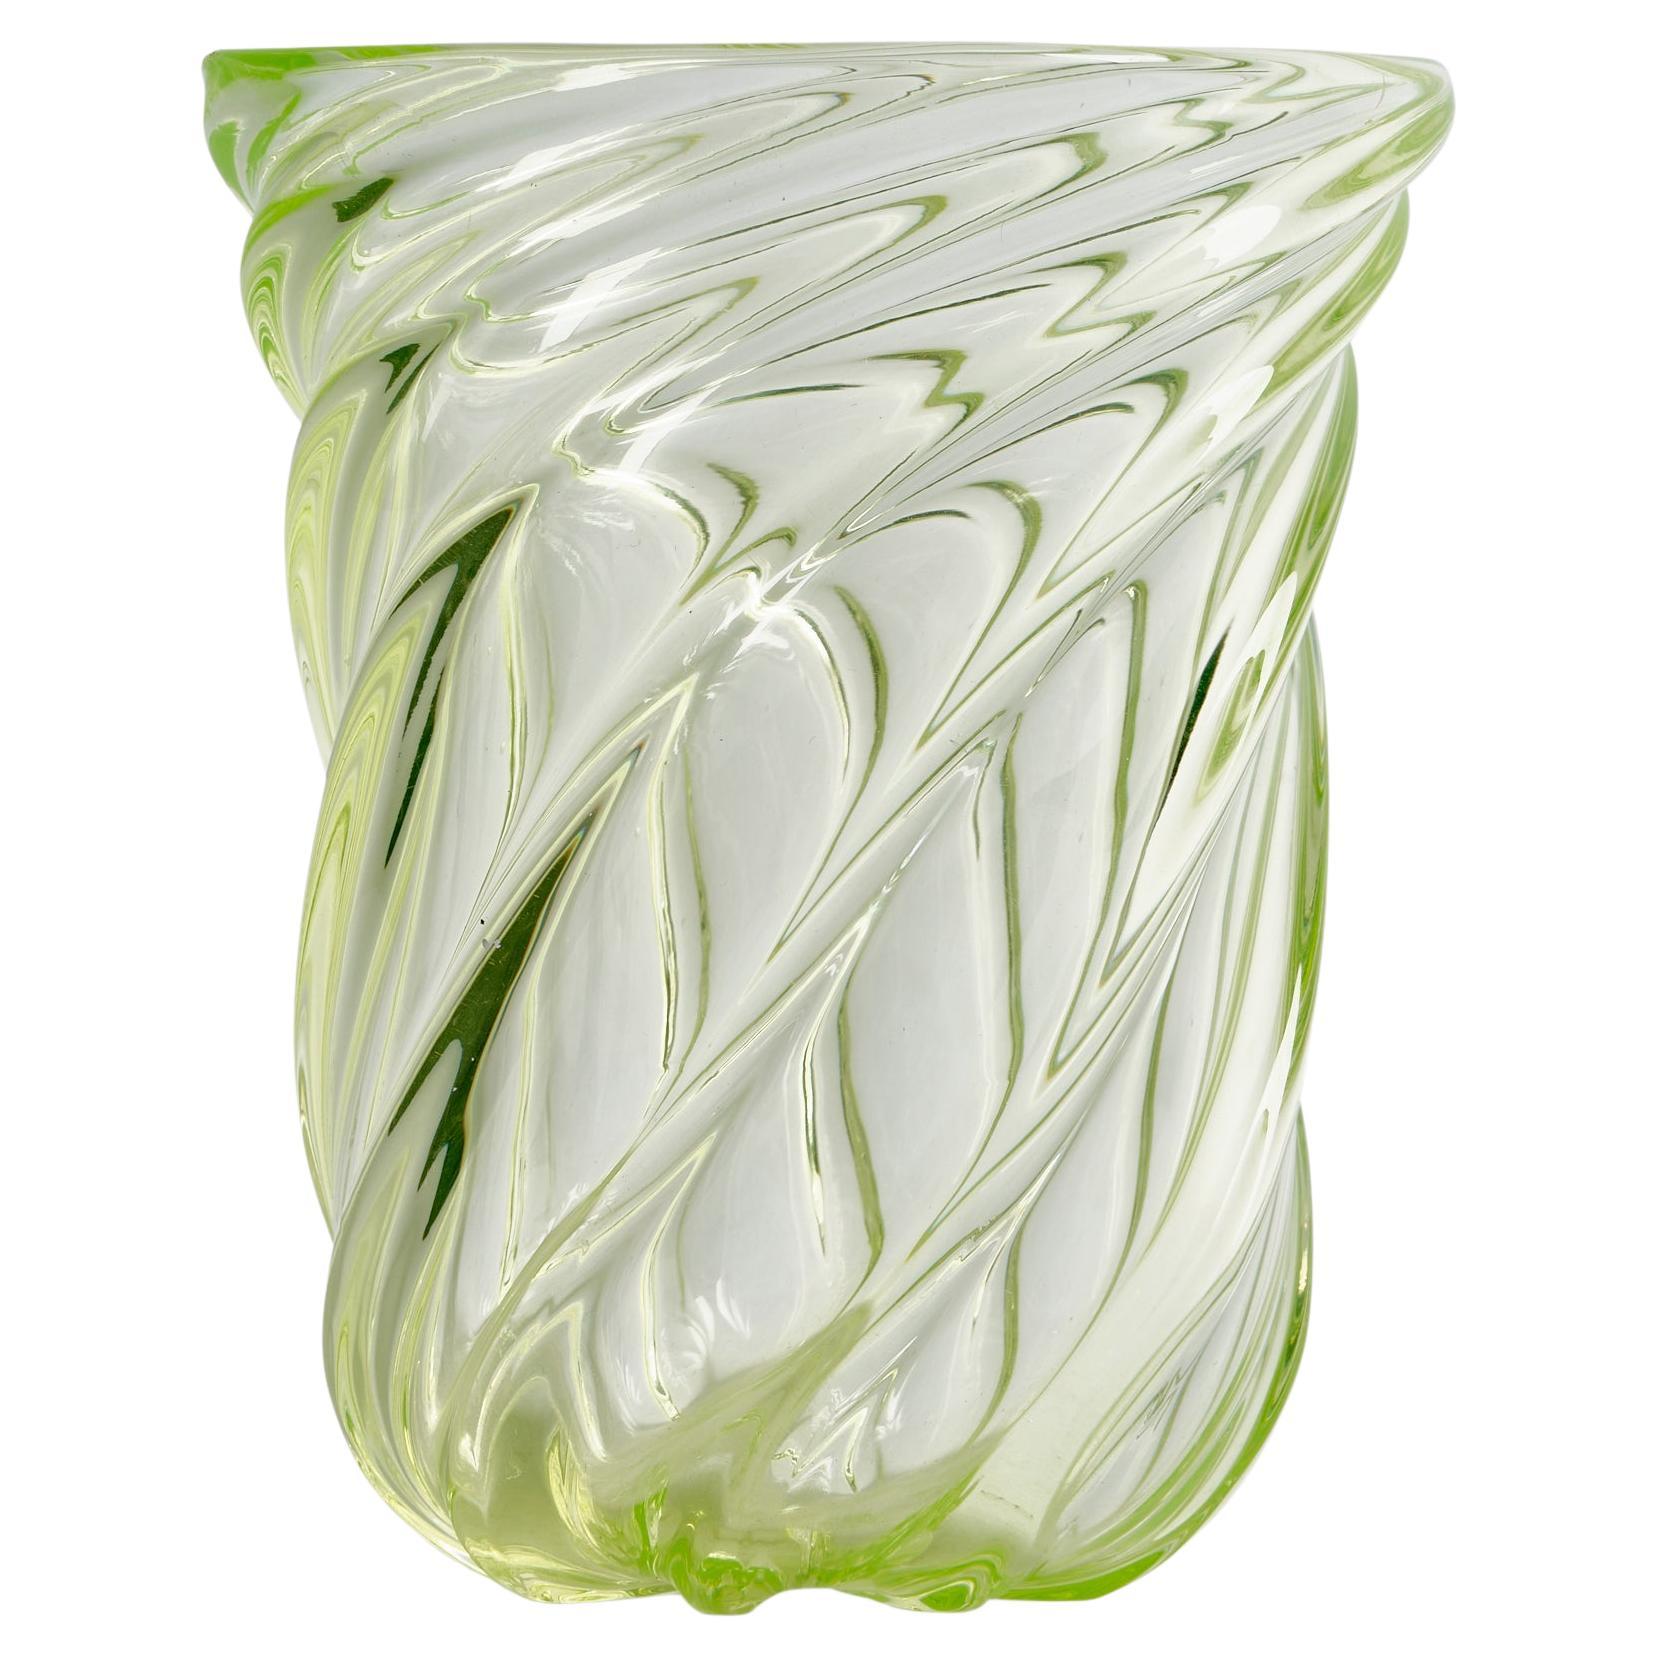 Reijmyre Glasbruk, Vase, Glas, Schweden, 1940er Jahre